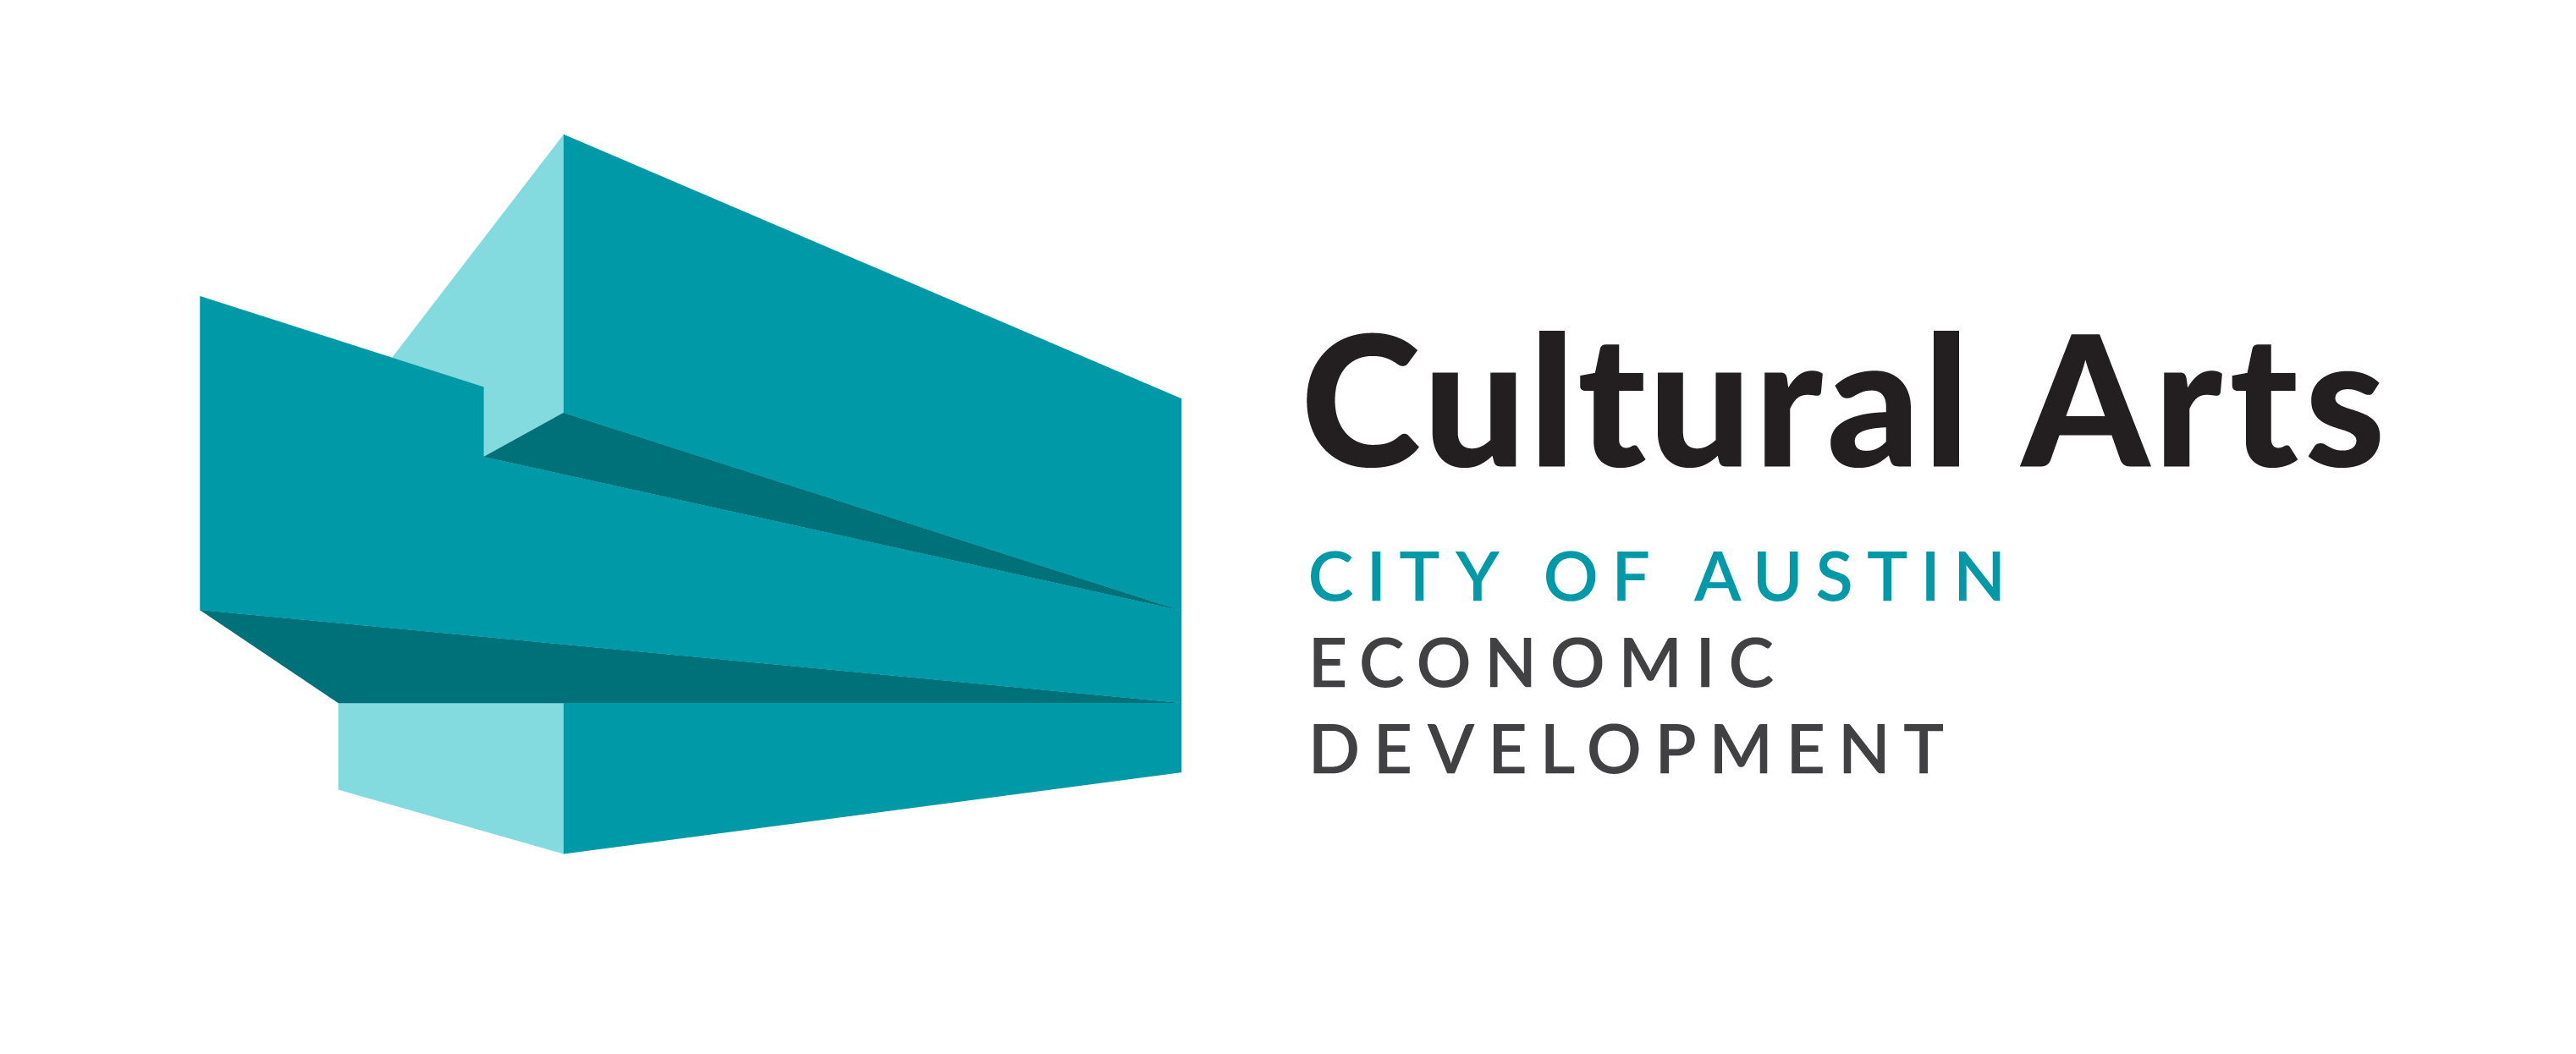 Cultural Arts, City of Austin Economic Development